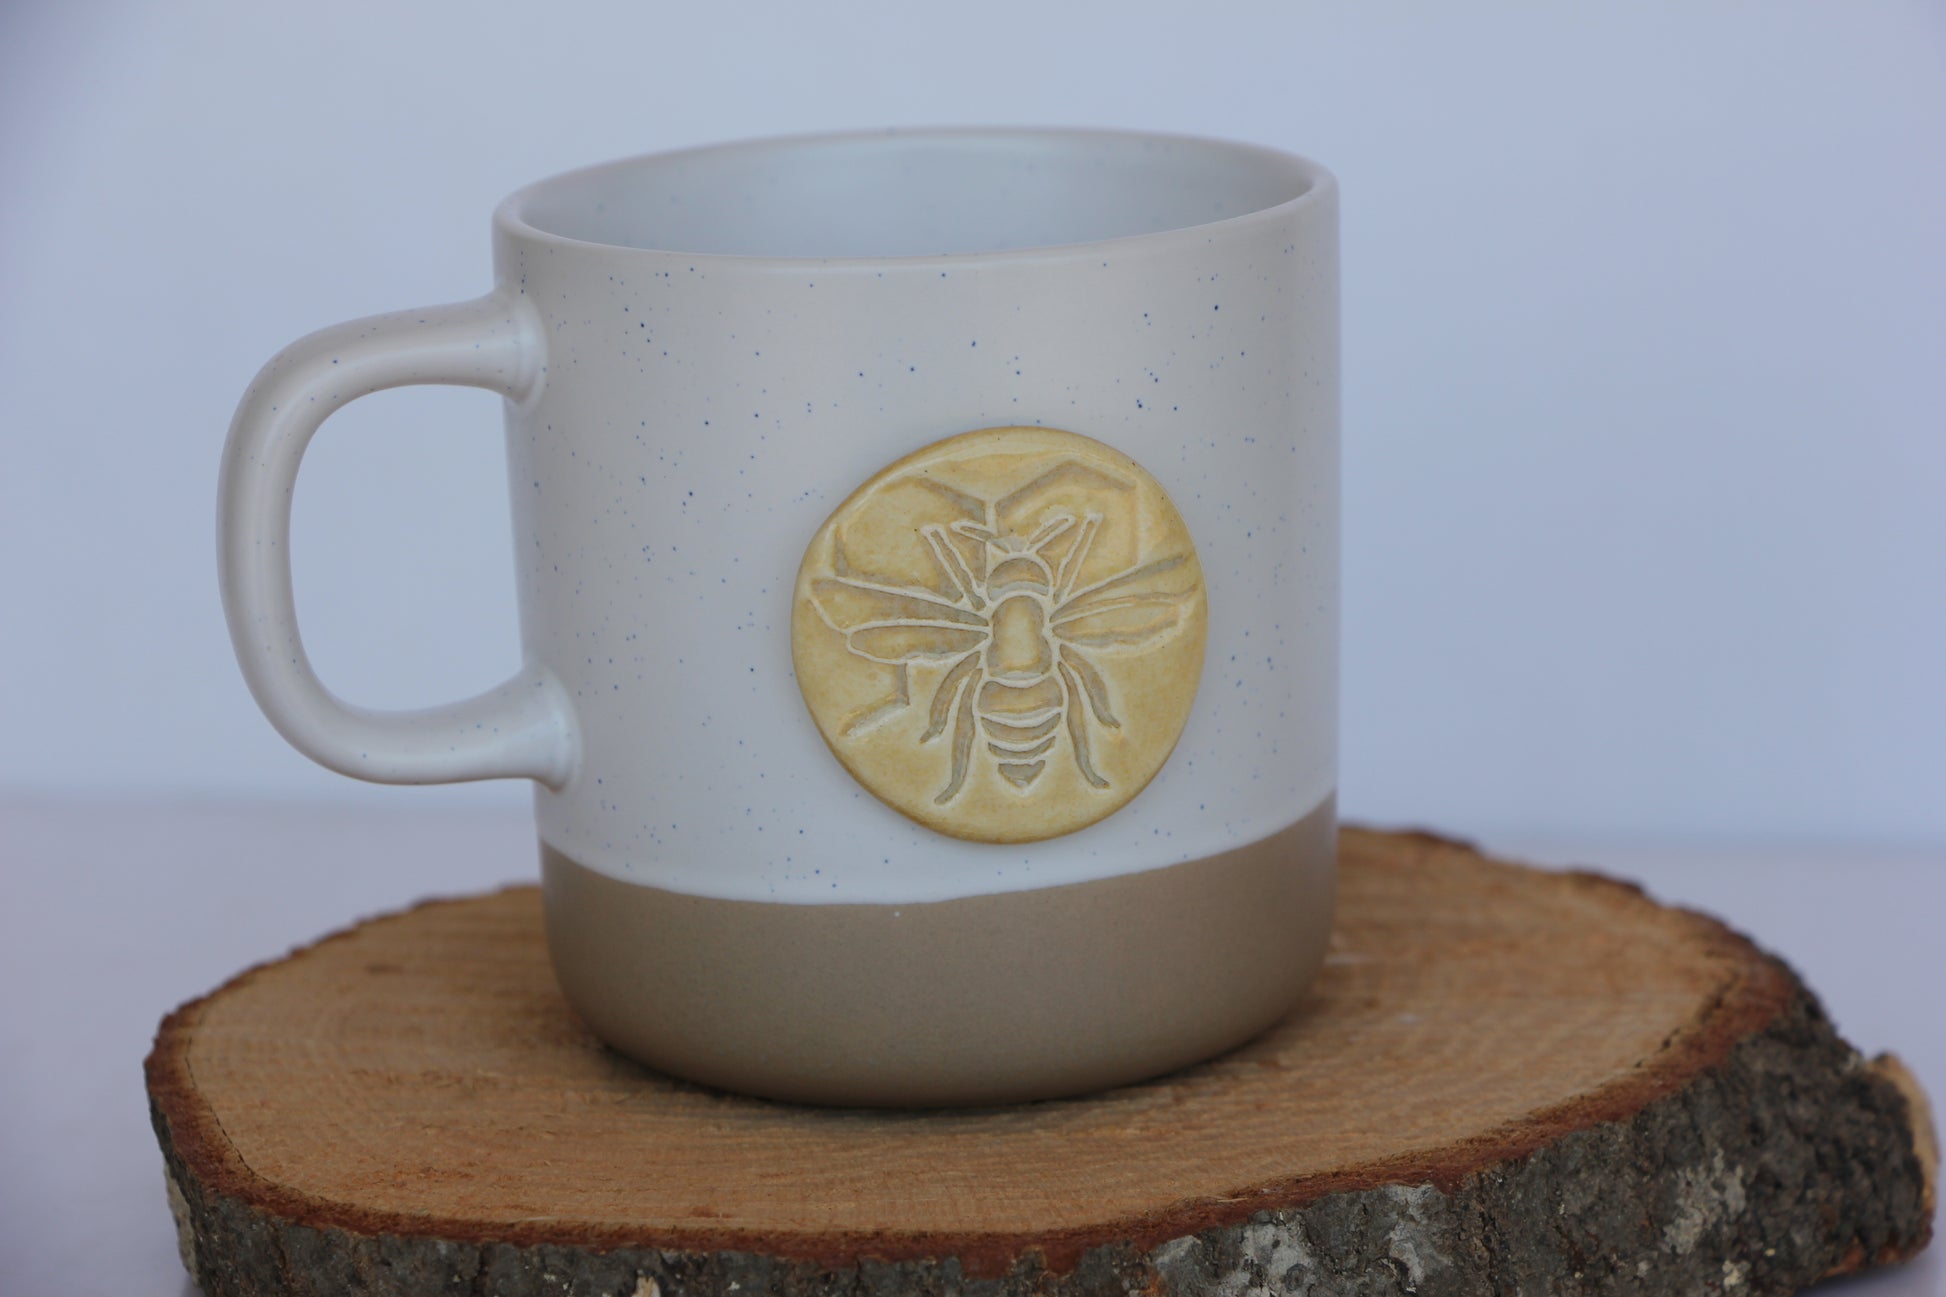 Cypress Home Elegant & Bee-utiful Ceramic Coffee Mug, 18 Ounces